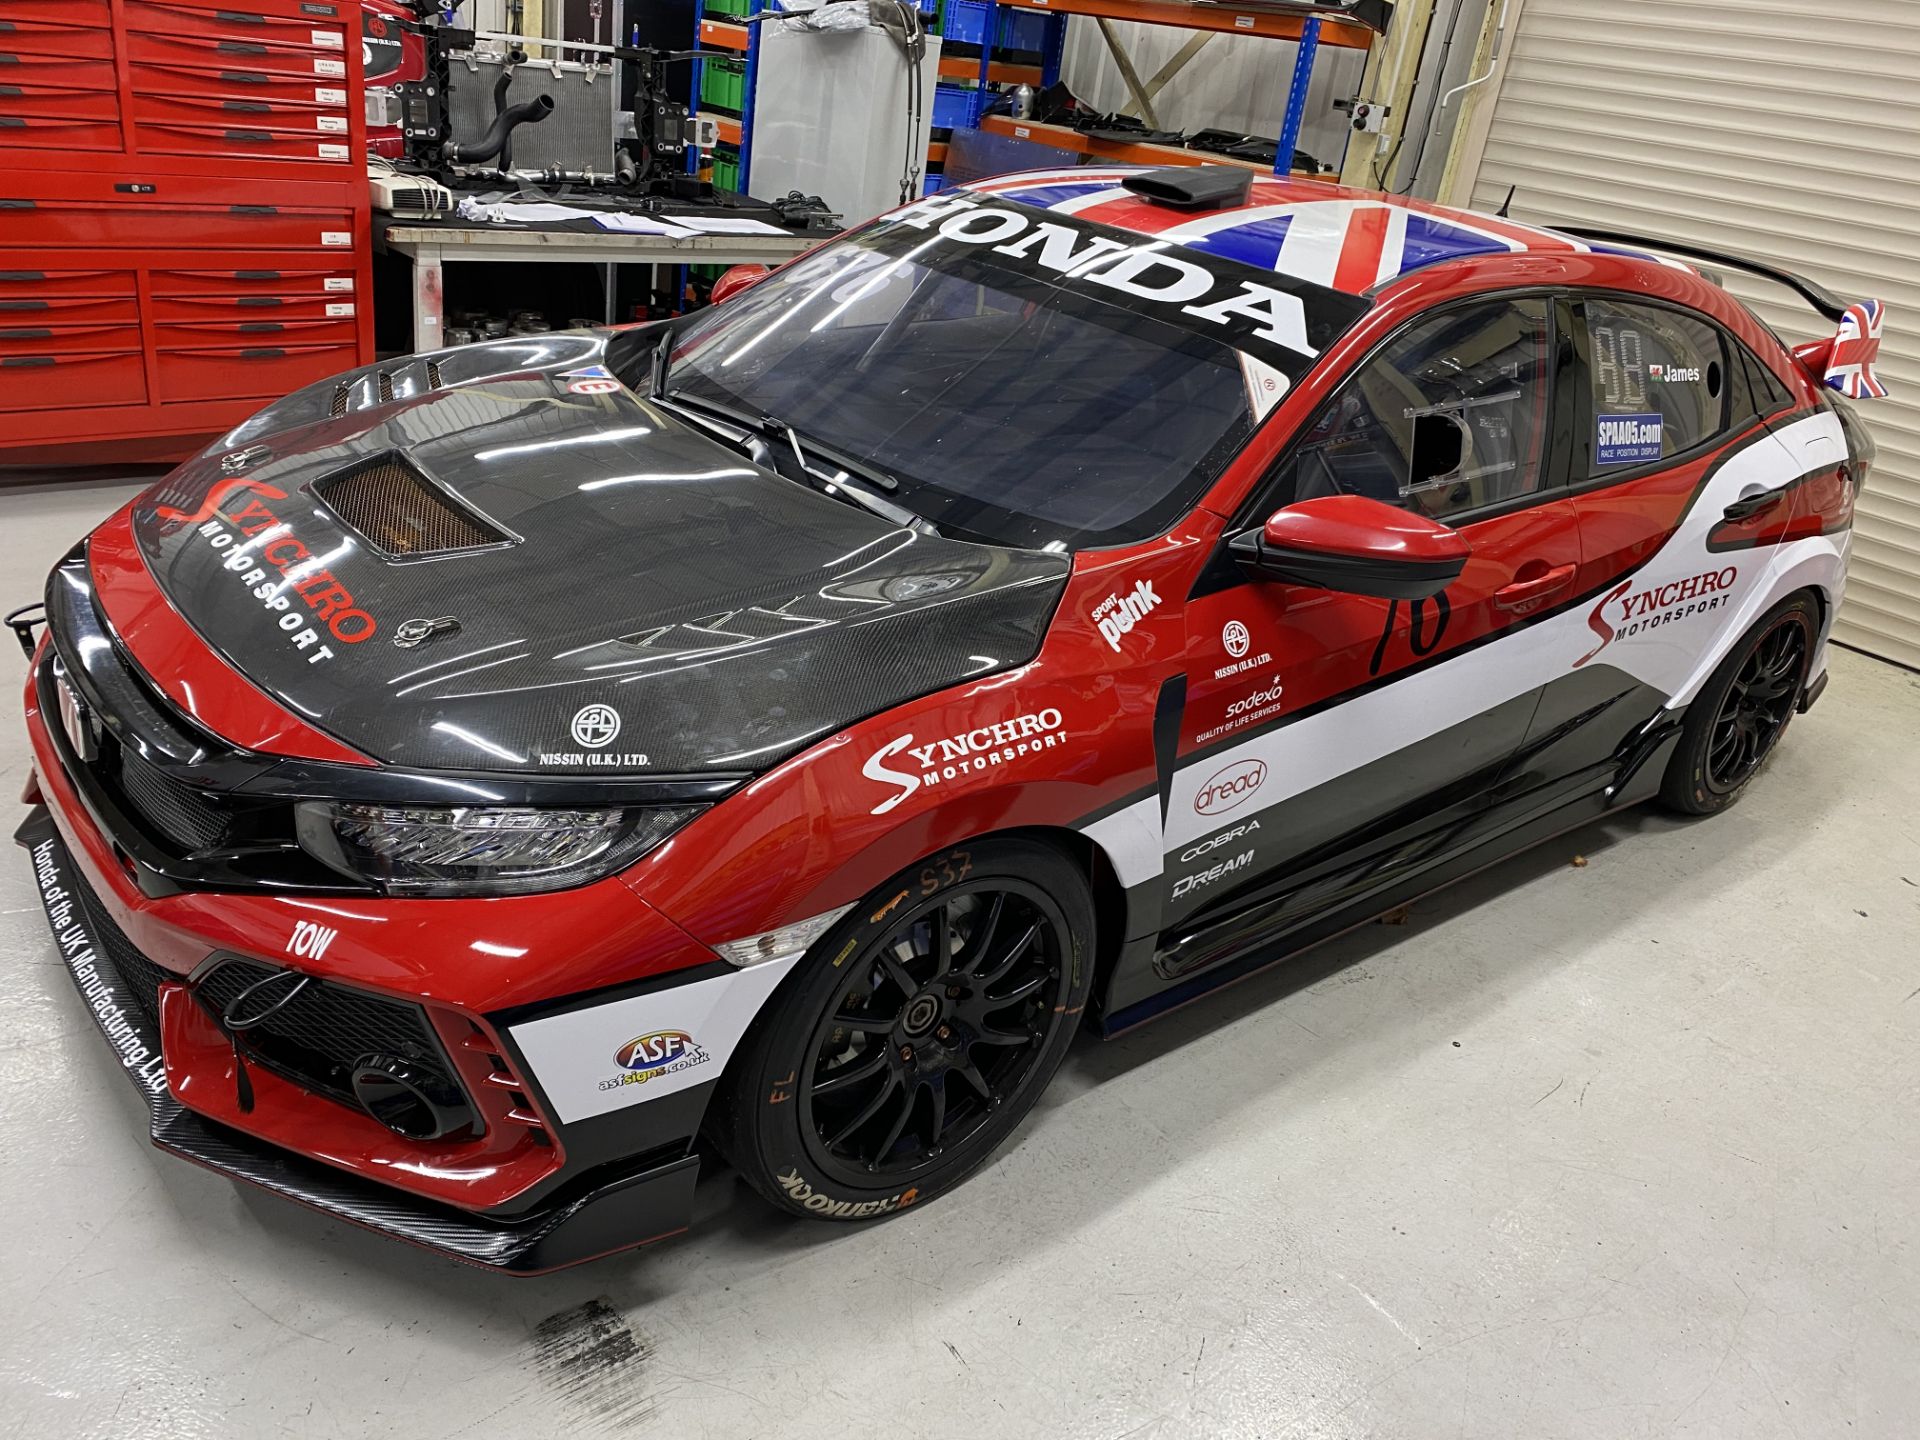 Honda Civic Endurance 20L FK8 type R left hand drive racing car, red and black paint finish, 2018 - Bild 5 aus 93